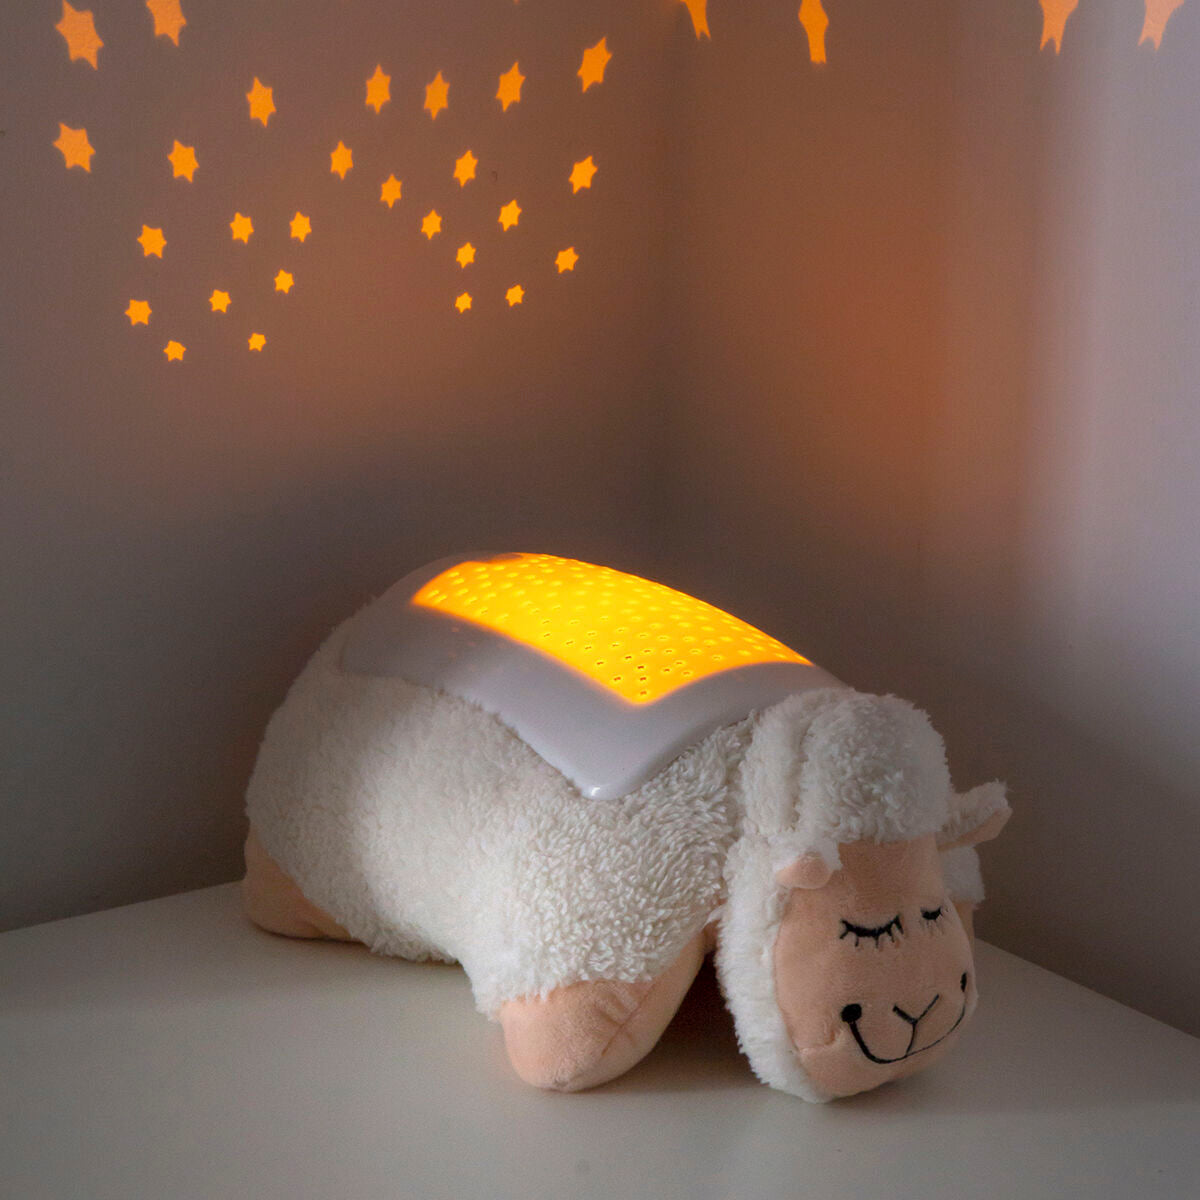 Kaufe LED Plüschtier Projektionslampe Schaf InnovaGoods bei AWK Flagship um € 30.00